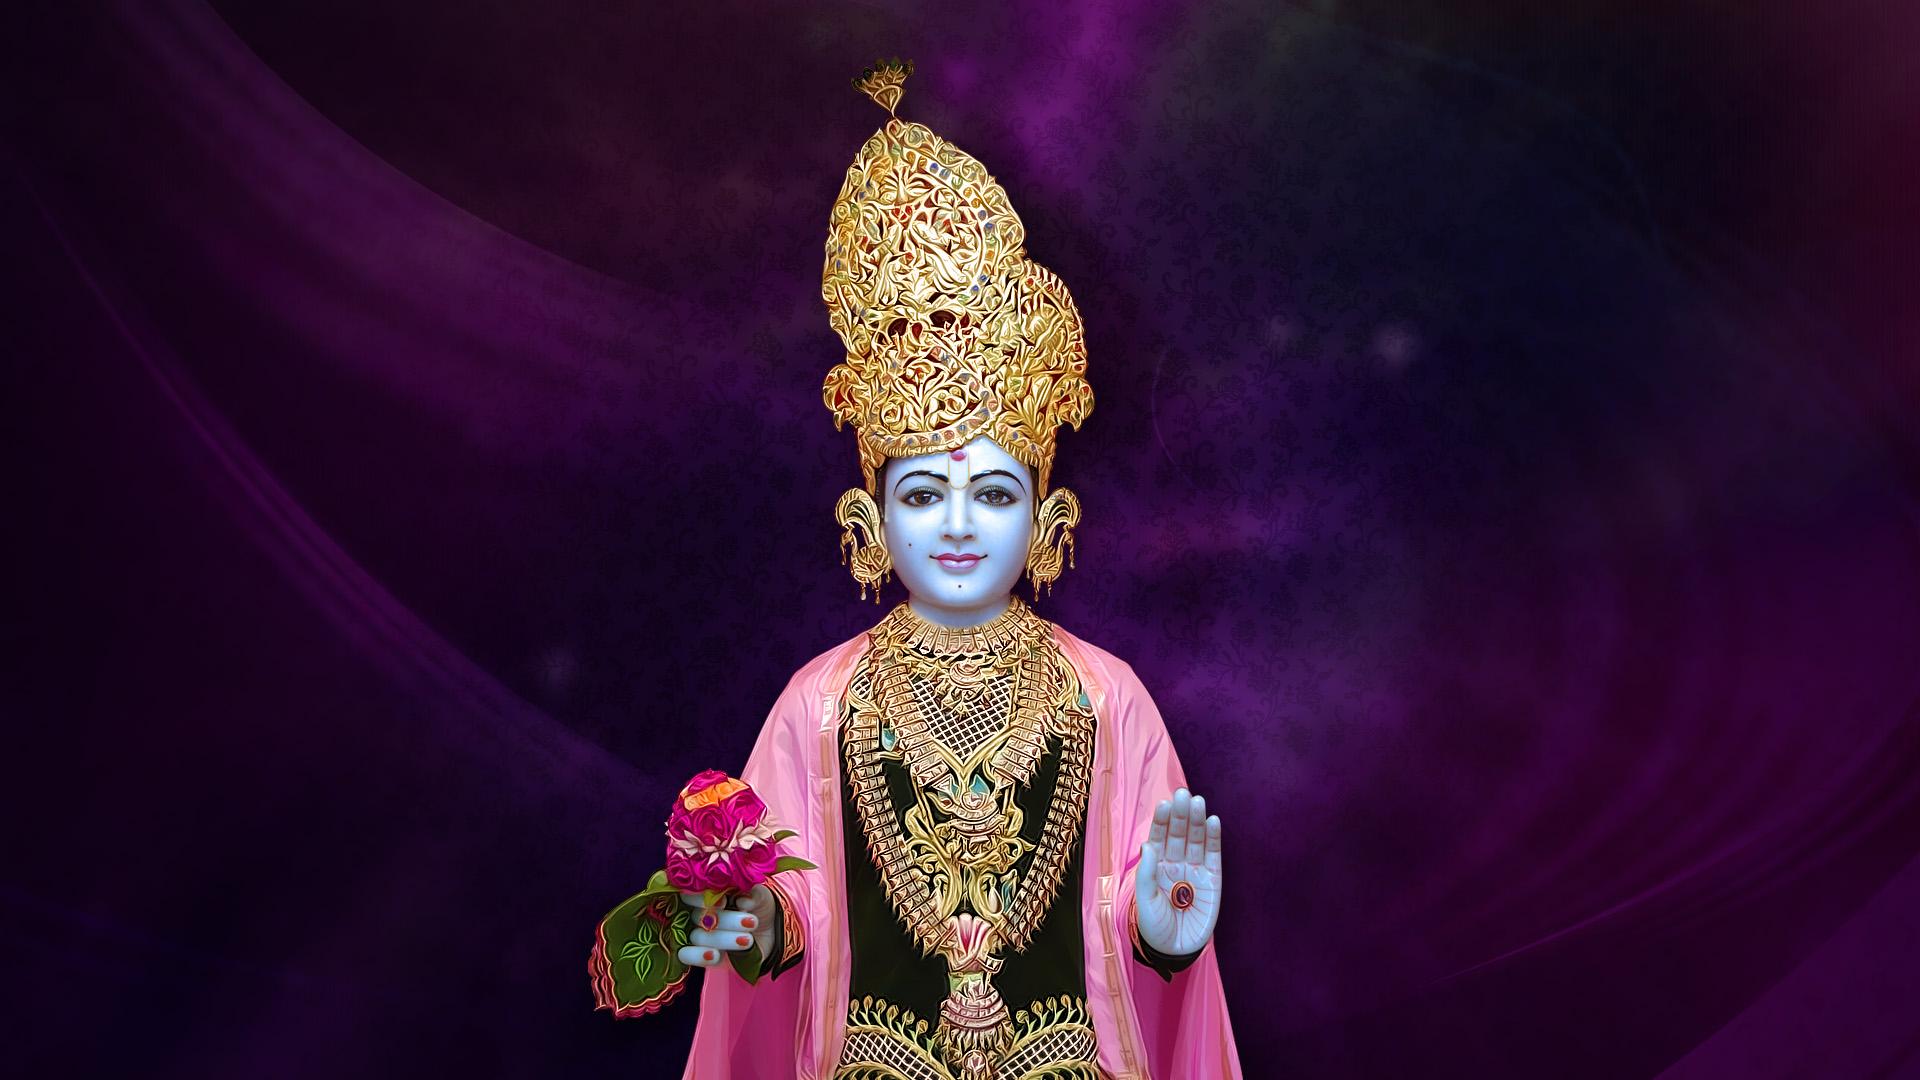 Baps Shri Swaminarayan Mandir Pictures | Download Free Images on Unsplash